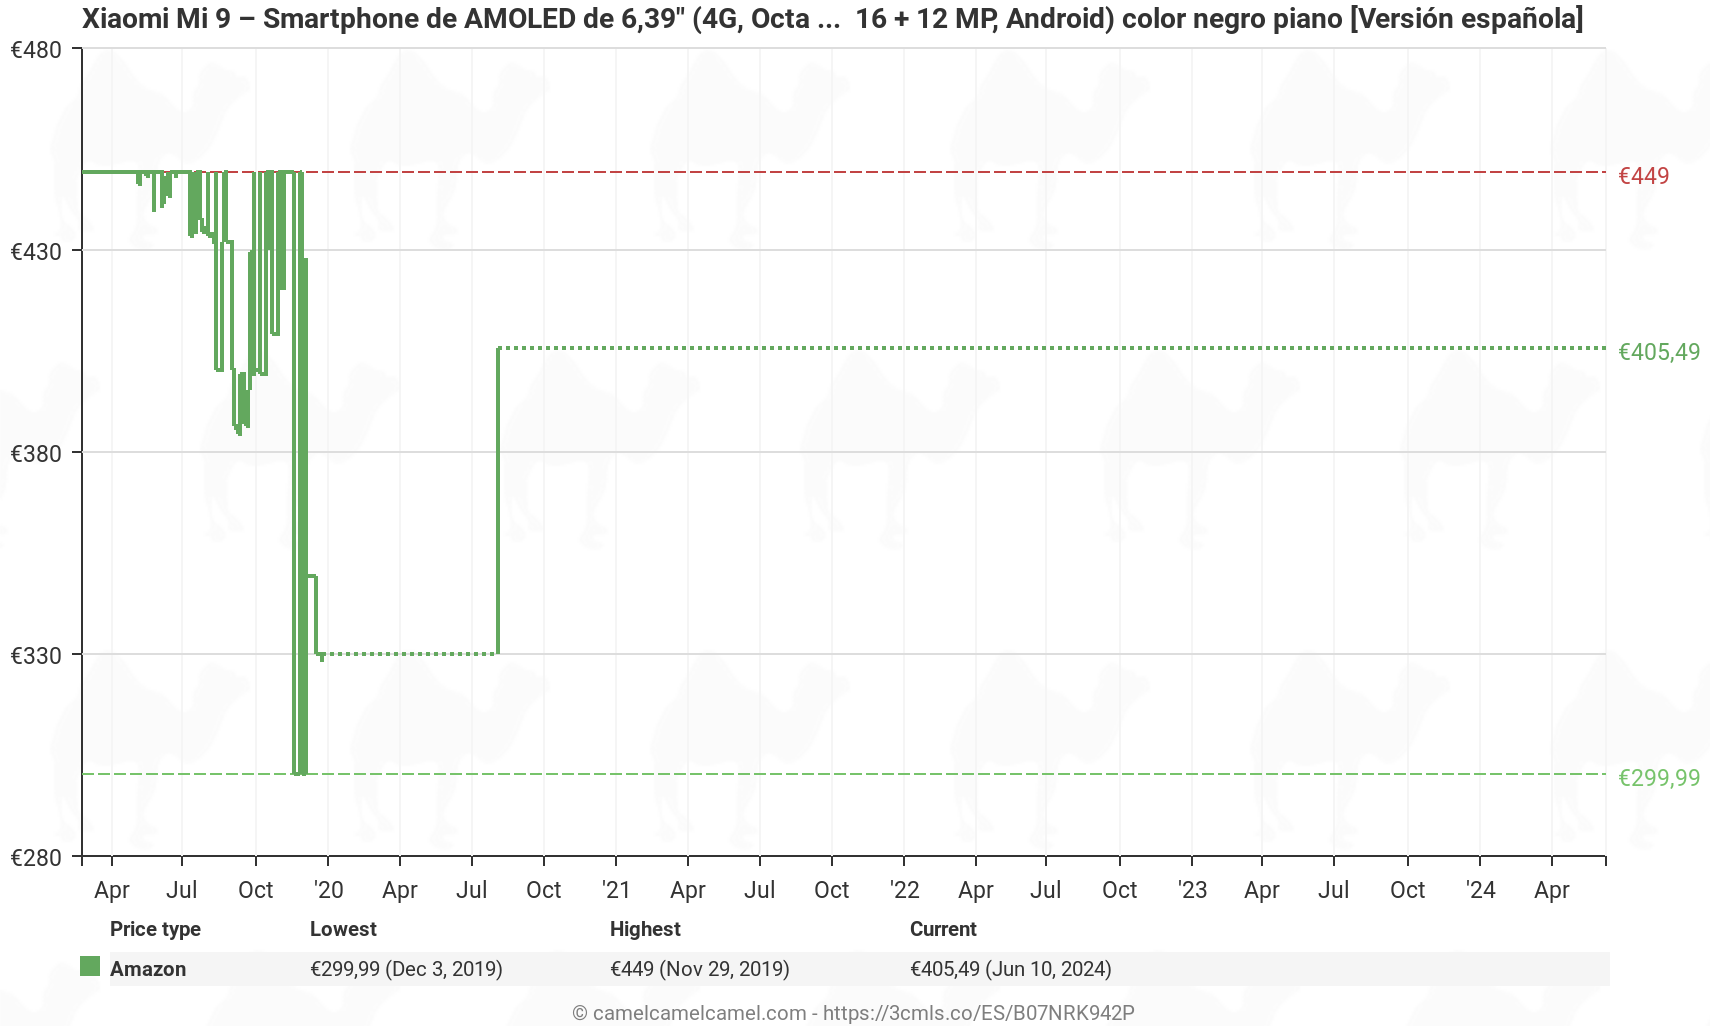 Xiaomi Mi 9 oferta: precio mínimo histórico Pre-Black Friday